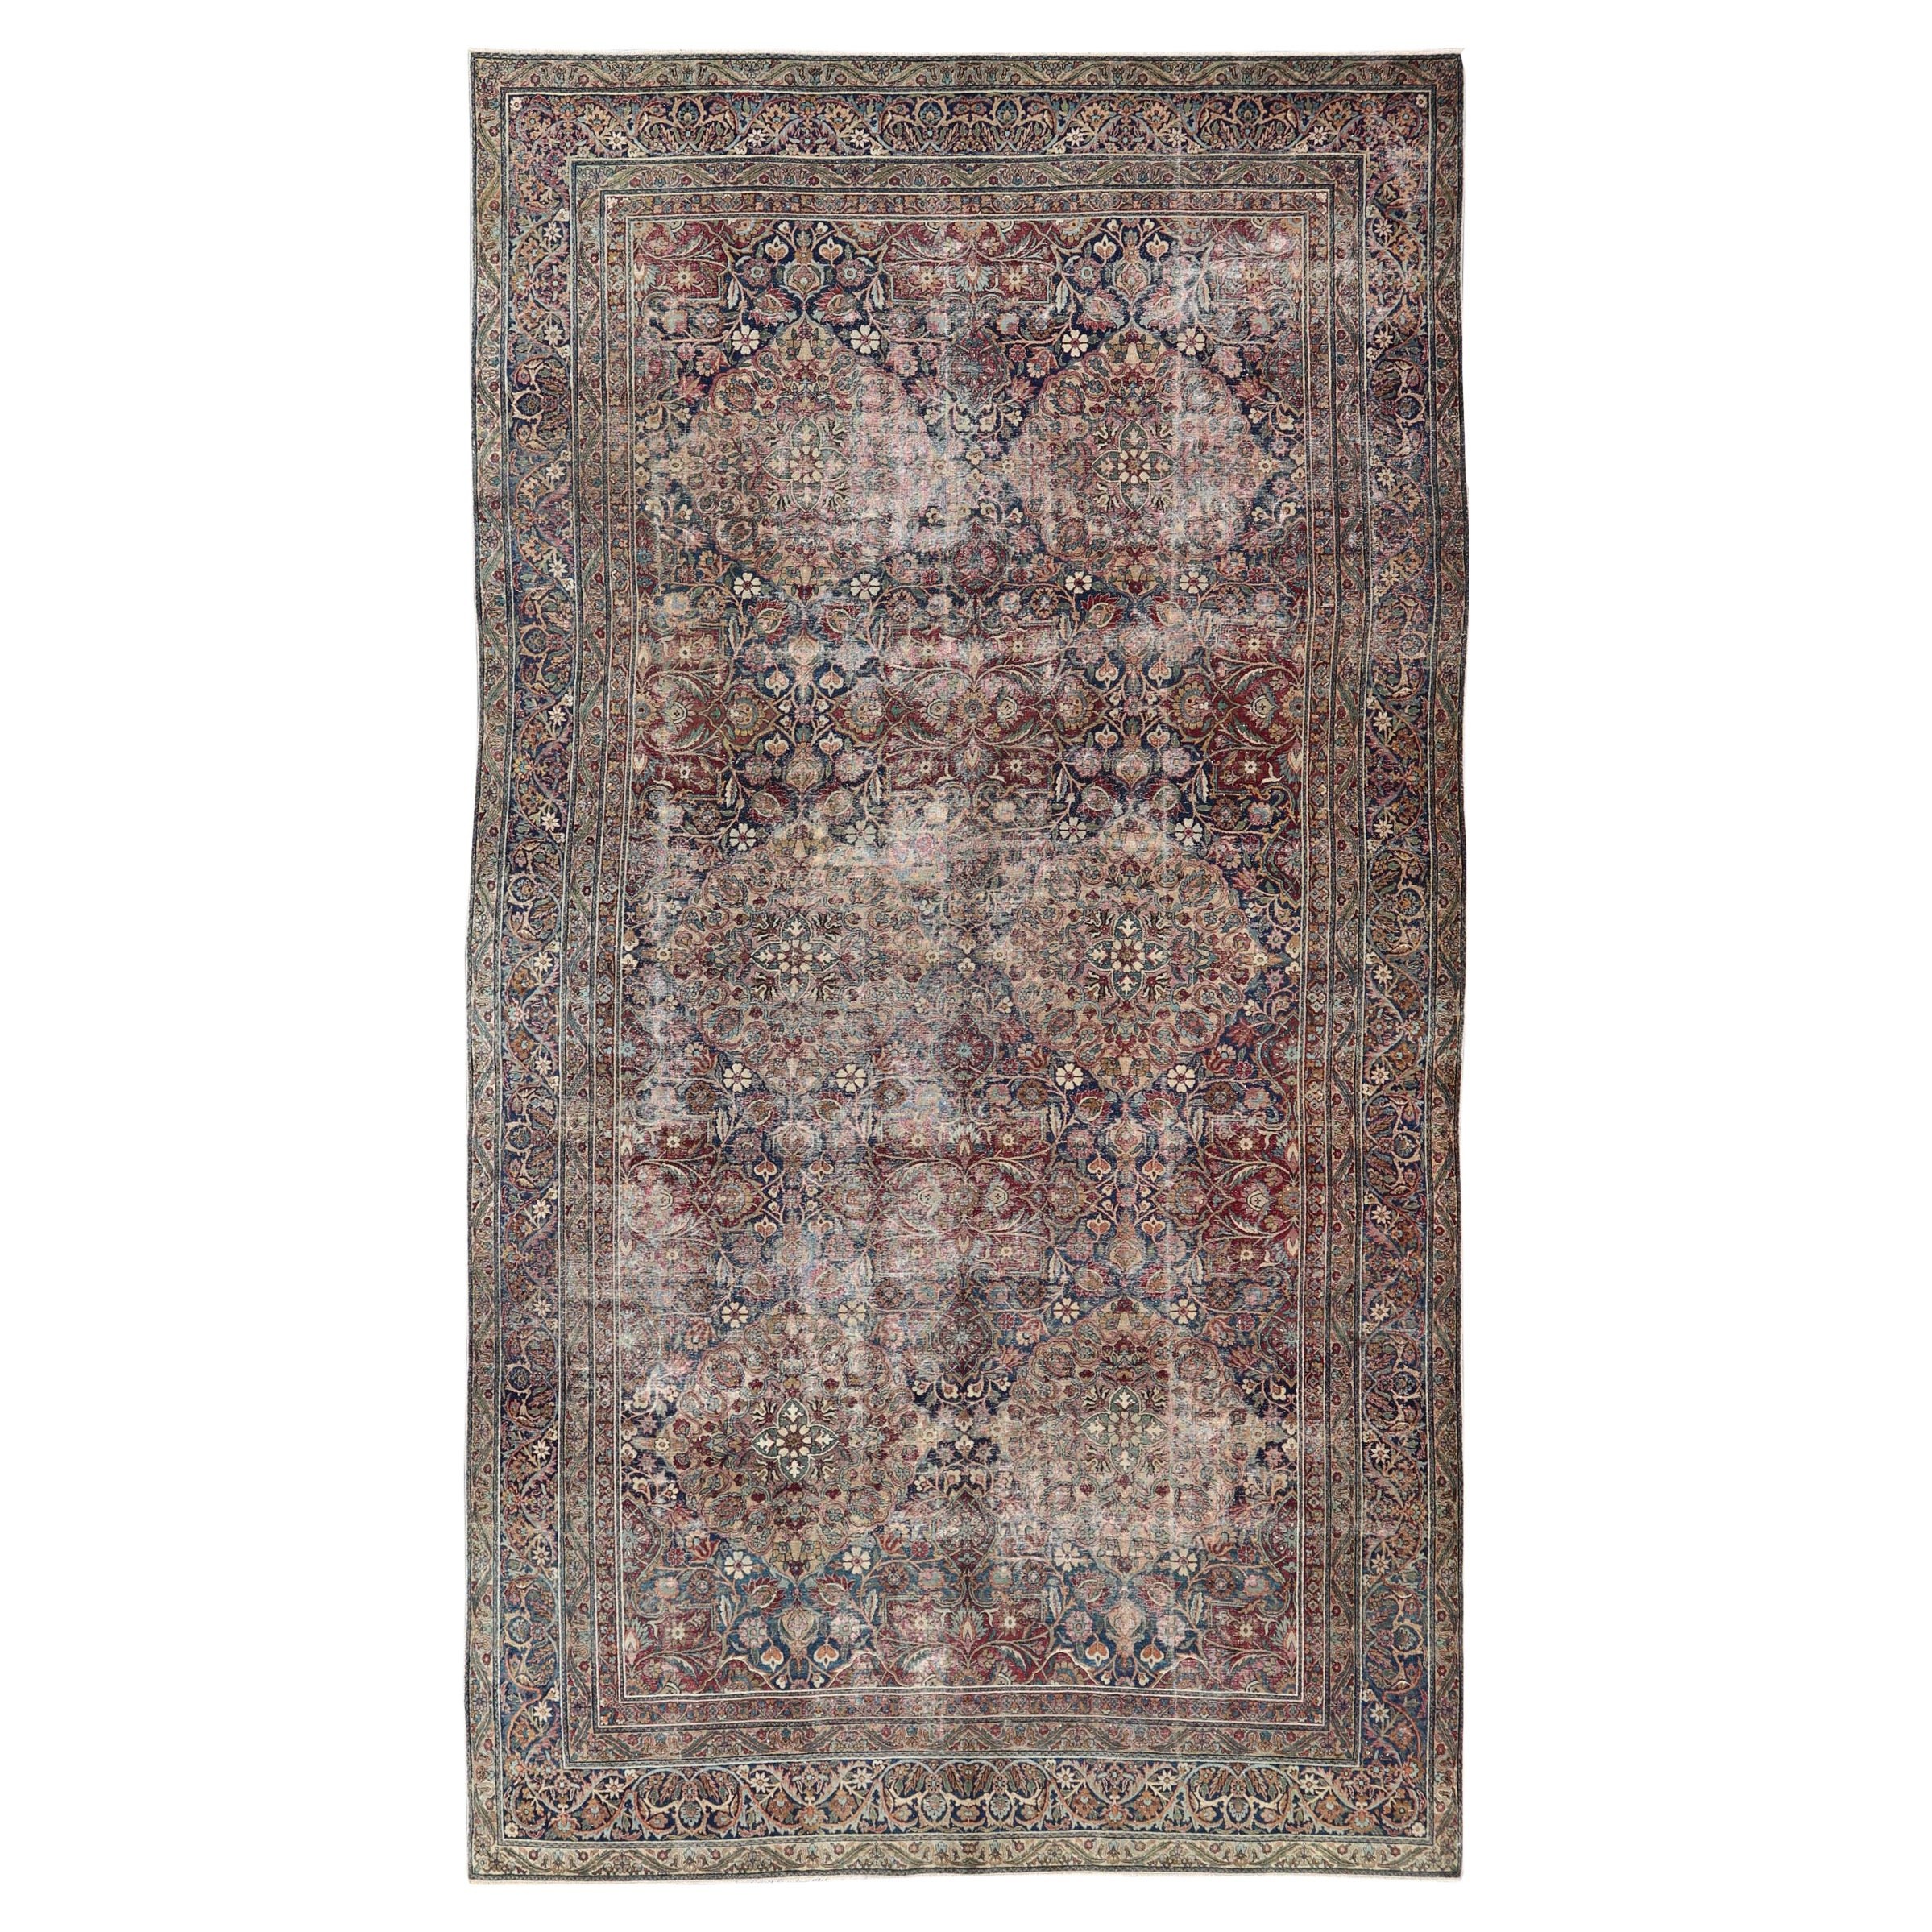 Grand tapis persan ancien Lavar Kerman à motifs floraux sur toute sa surface 